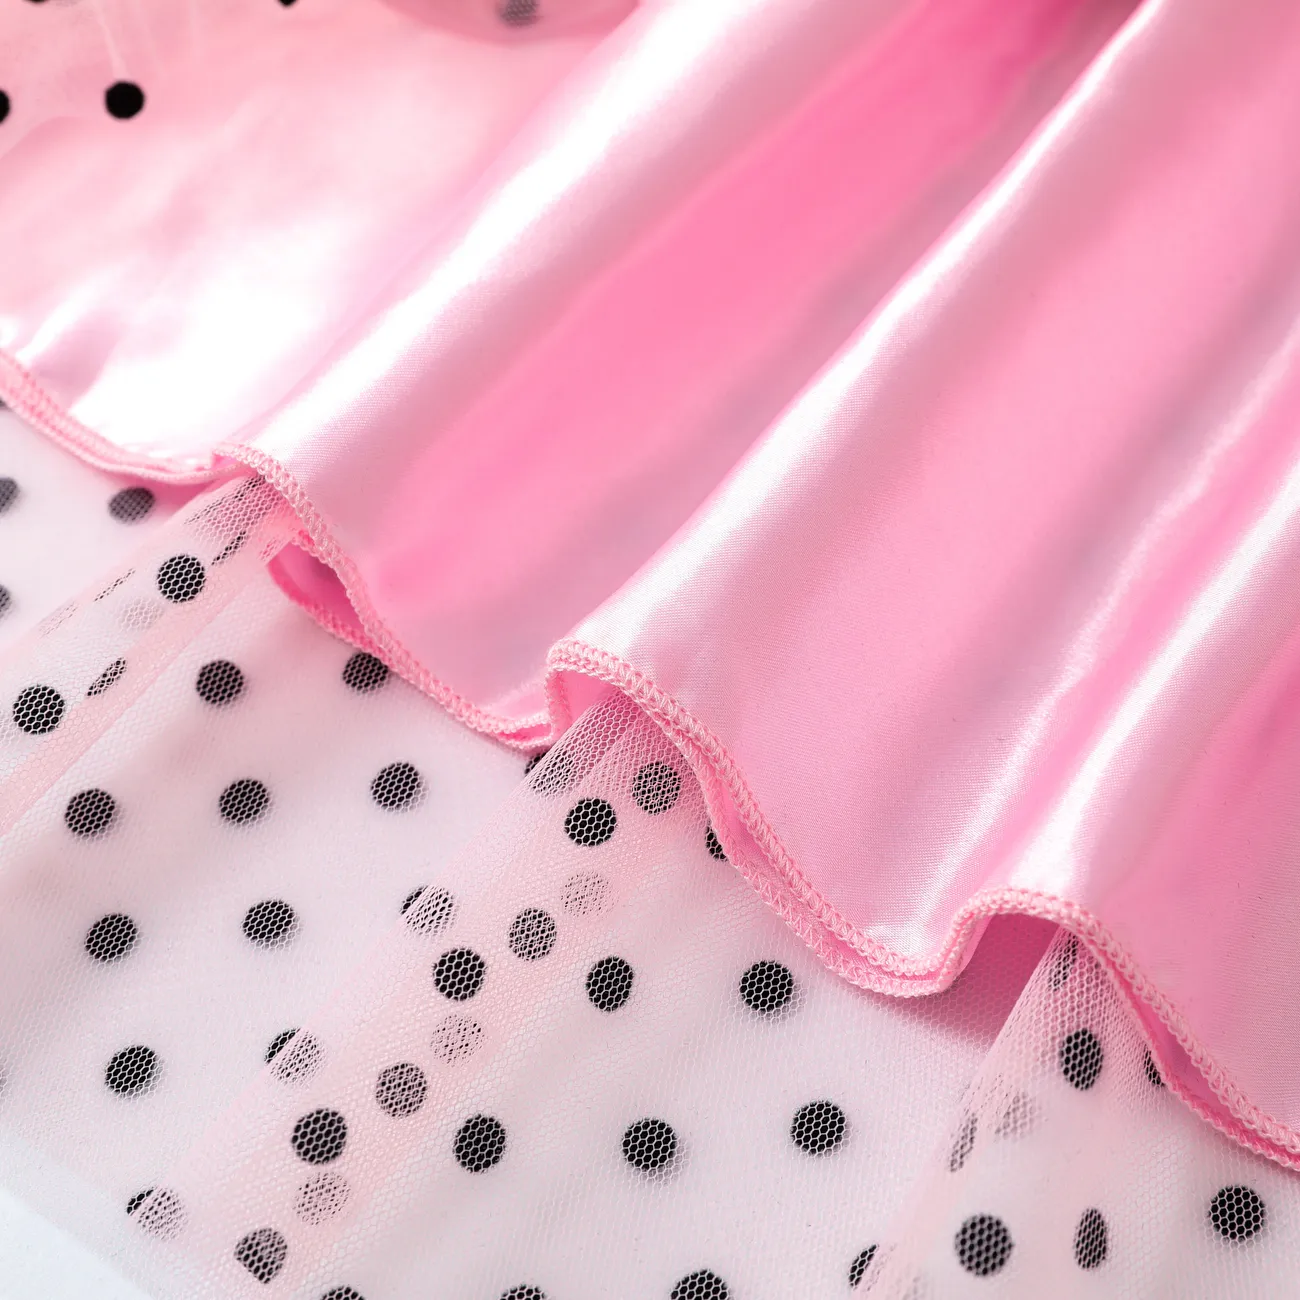 Sweet Polka Dot Multi-layered Skirt for Girls - Oversized Polyester Clothes Set Pink big image 1